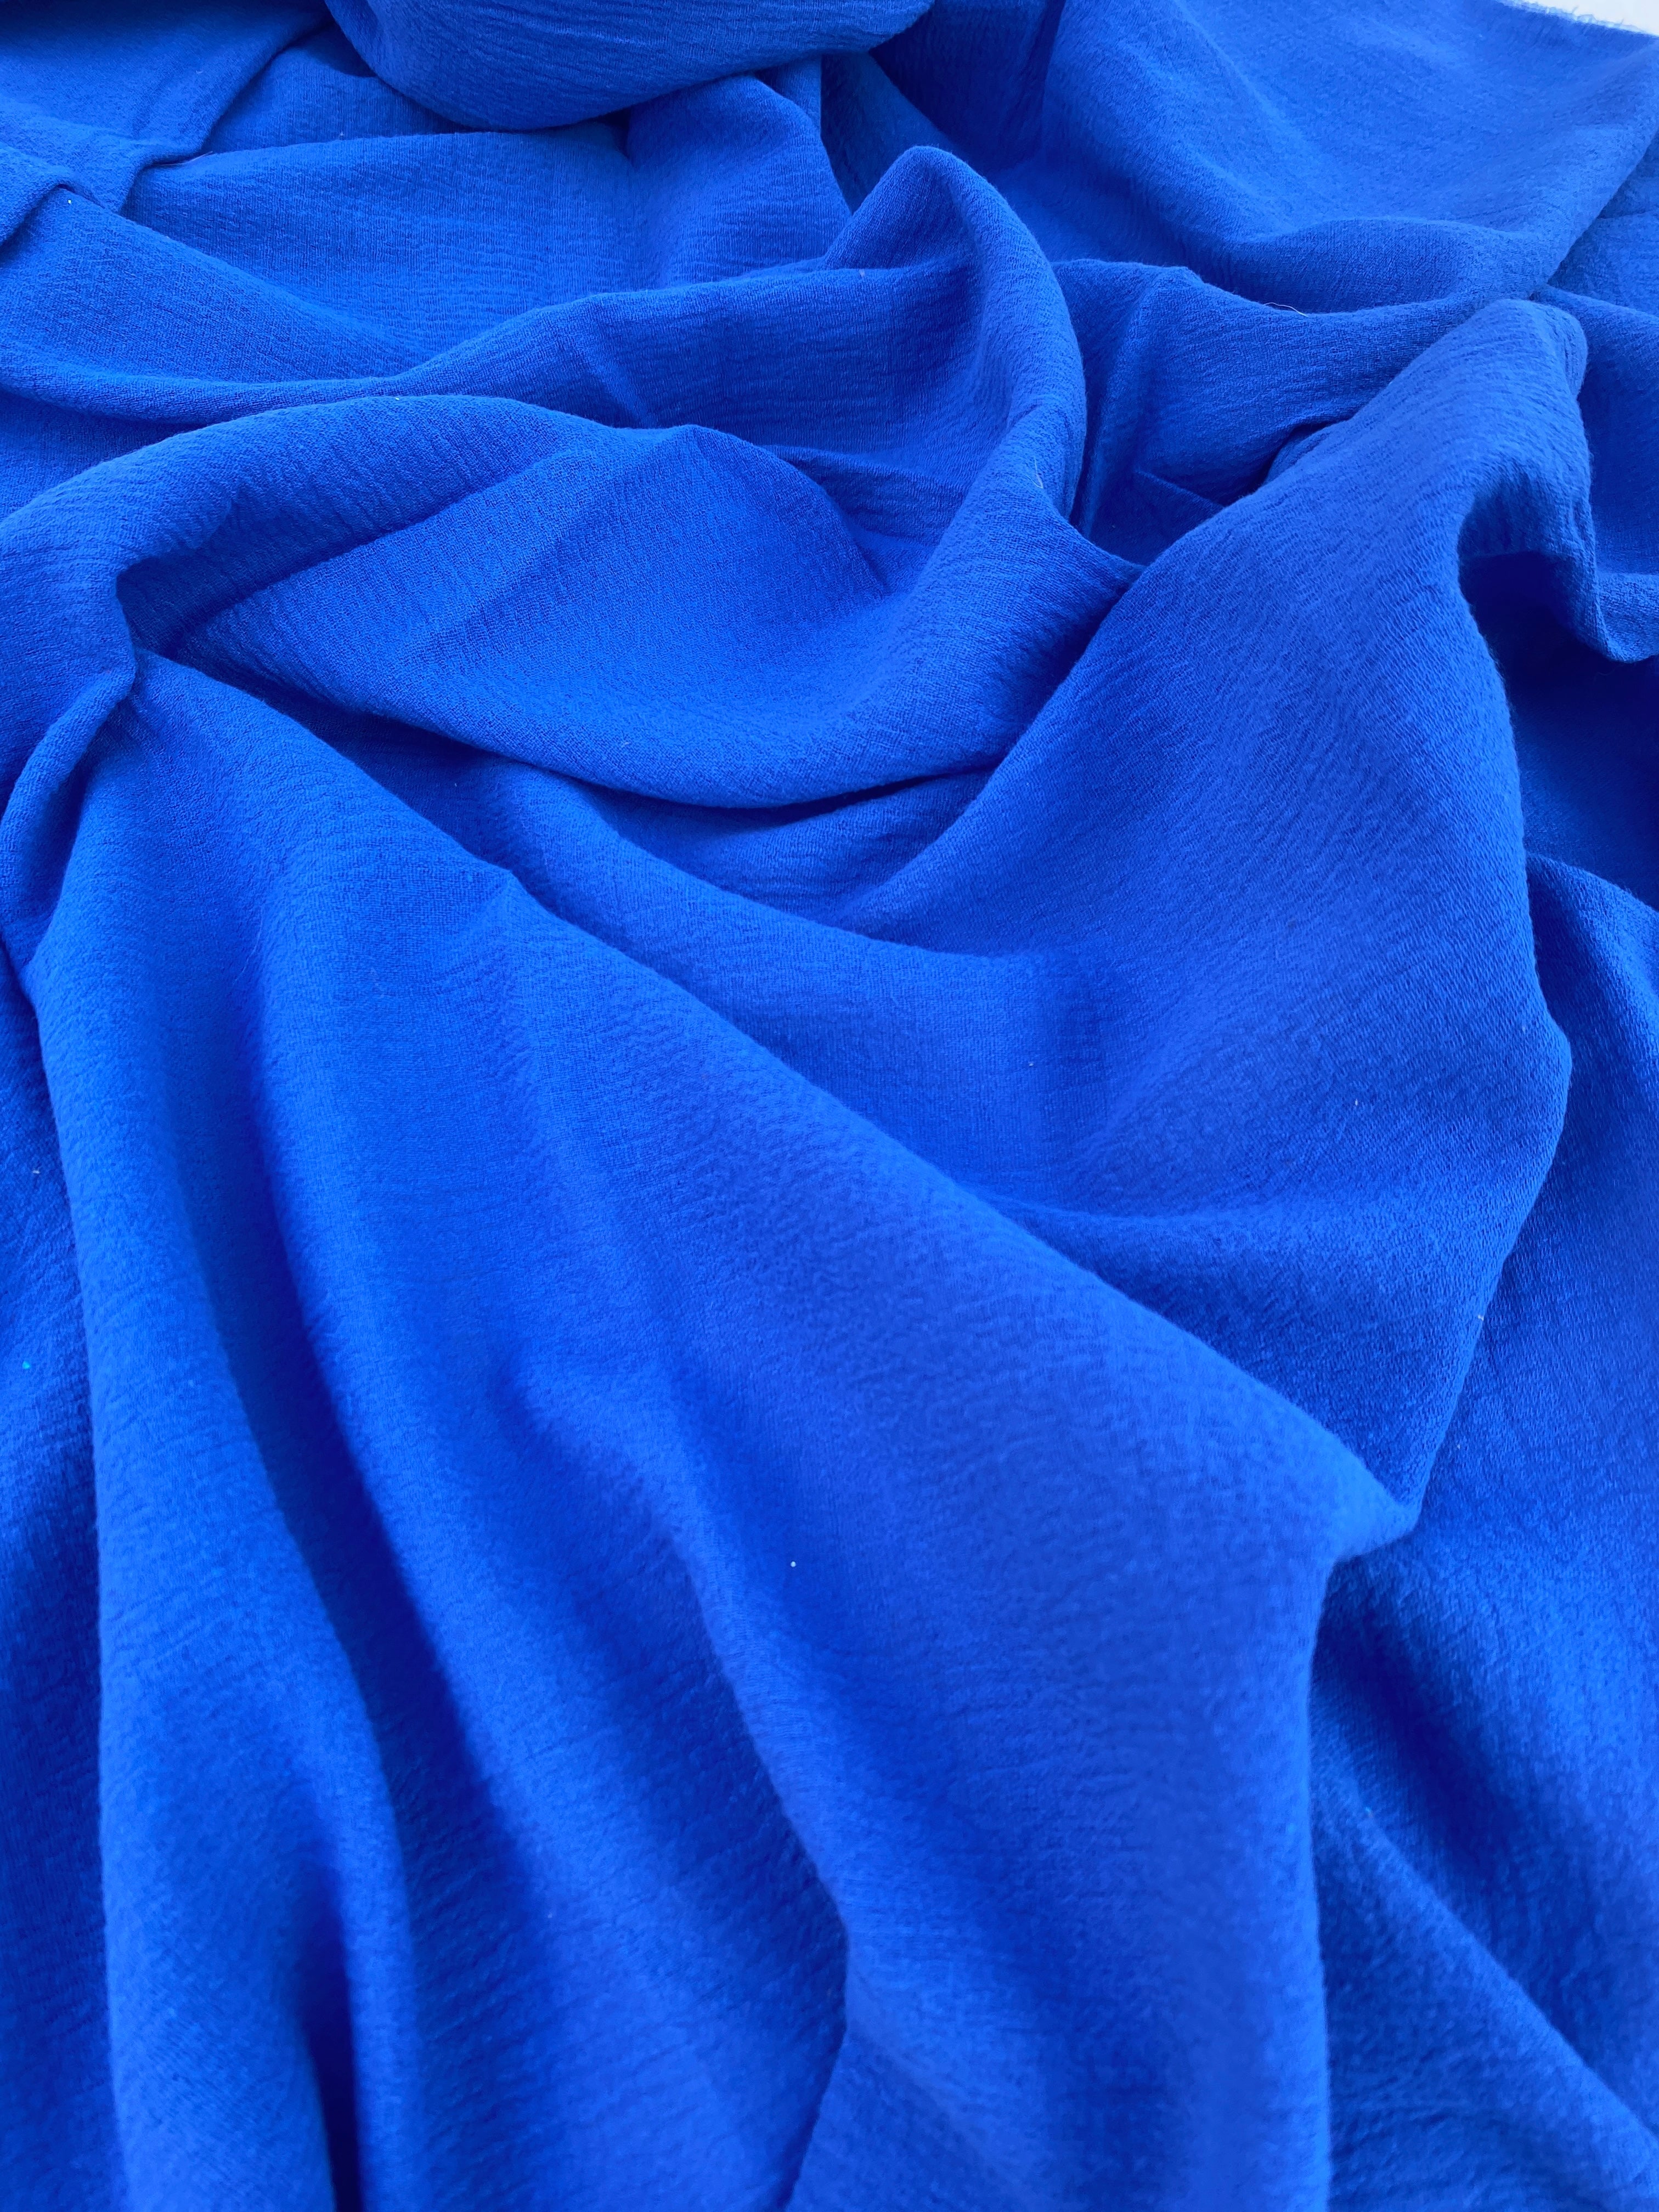 royal blue cotton gauze, cotton gauze fabric, blue gauze fabric, electric blue gauze, royal blue cotton by the yard, double gauze royal blue